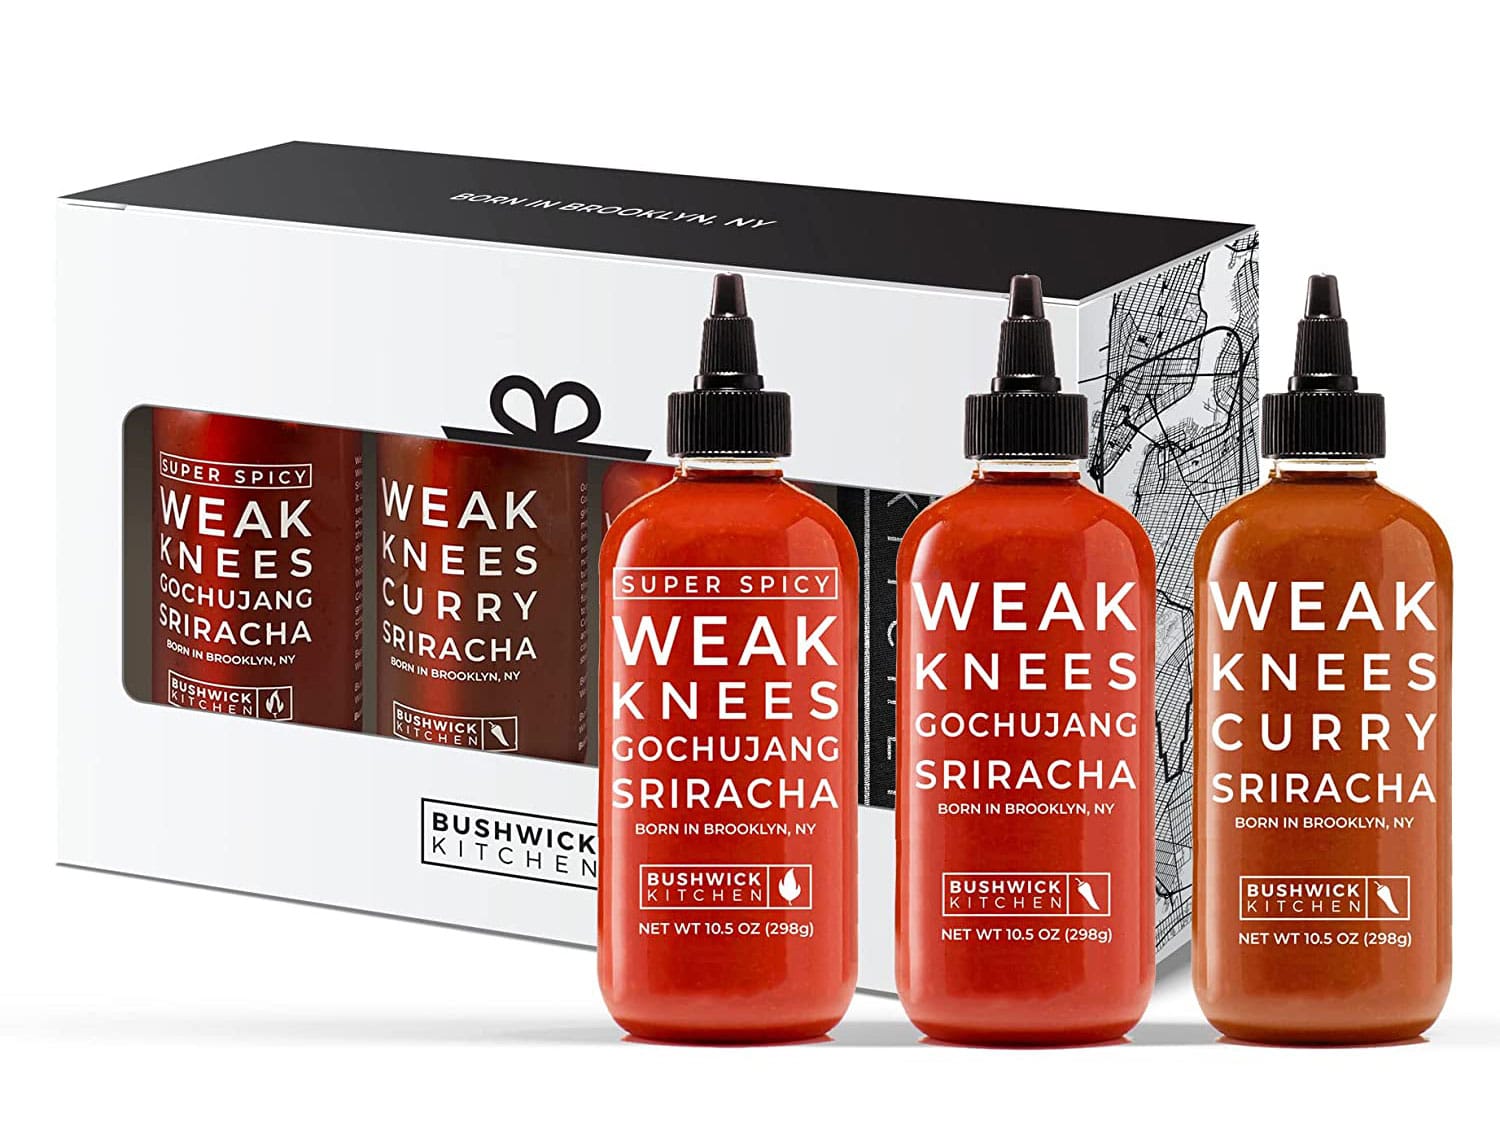 The Weak Knees Sriracha Hot Sauce Gift Set from Bushwick Kitchen.